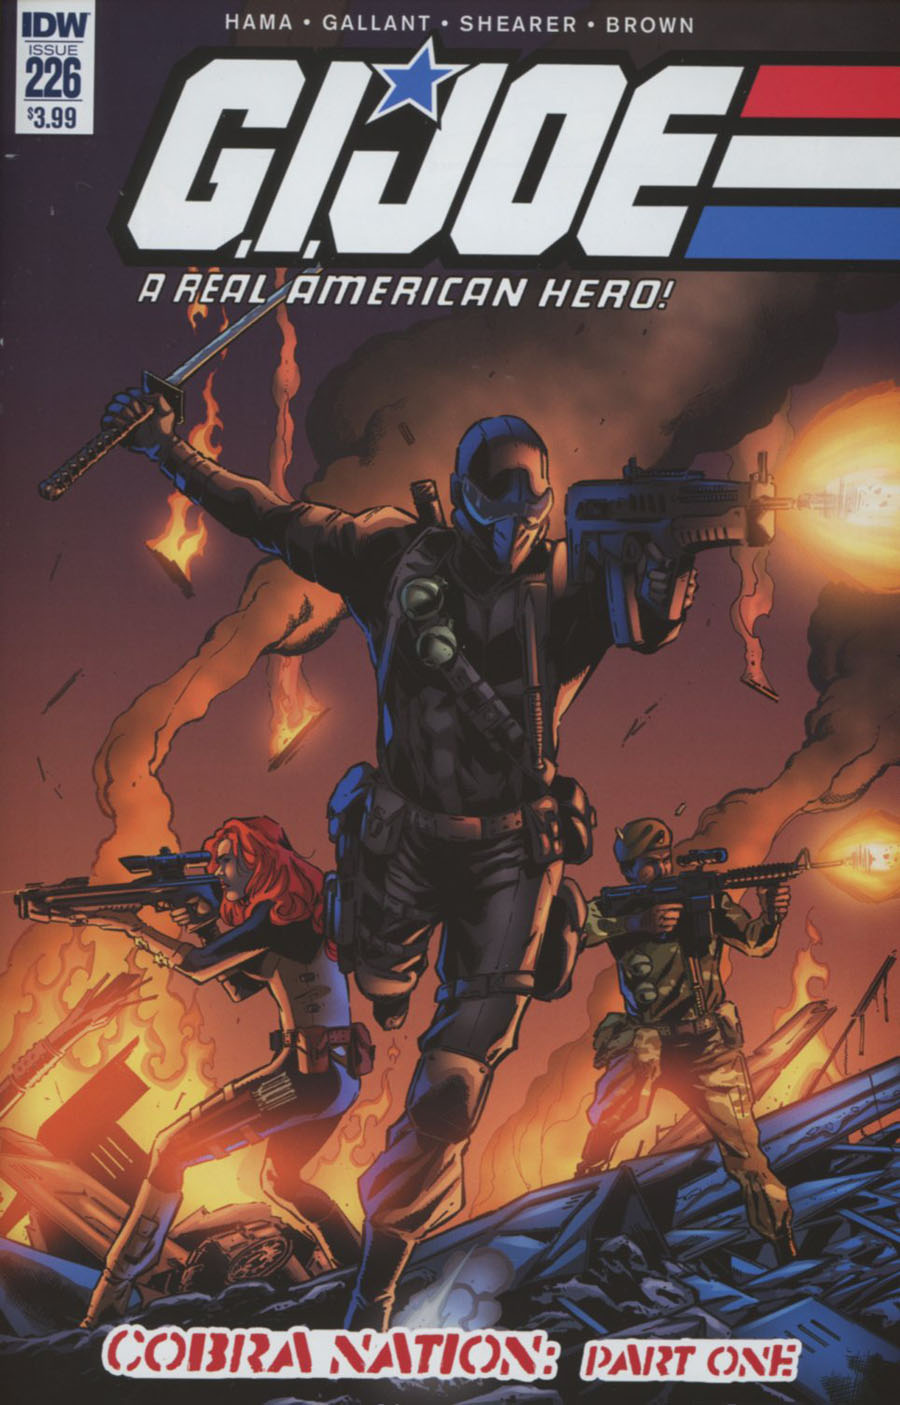 GI Joe A Real American Hero #226 Cover A Regular SL Gallant Cover